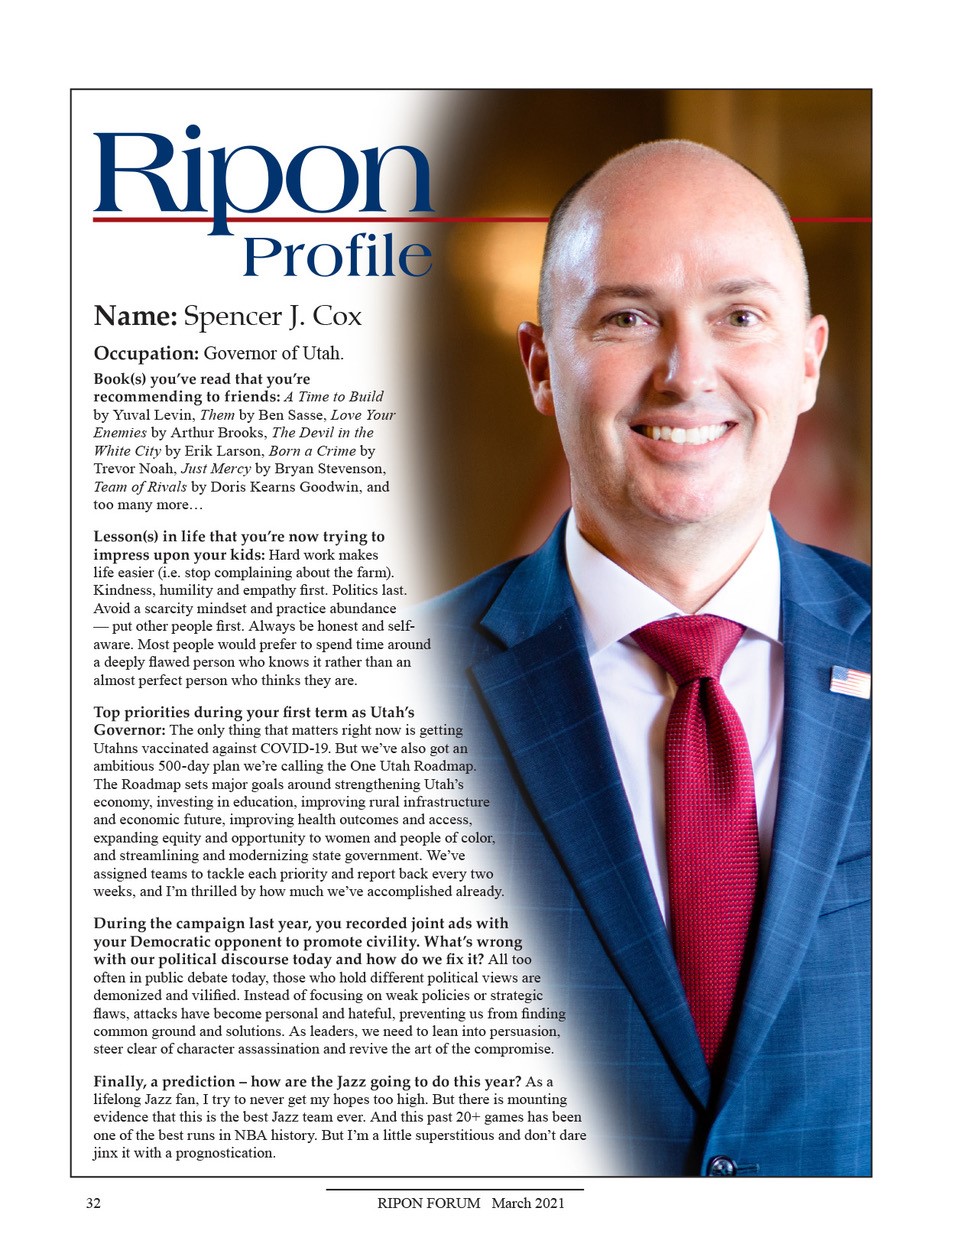 Ripon Profile of Spencer Cox